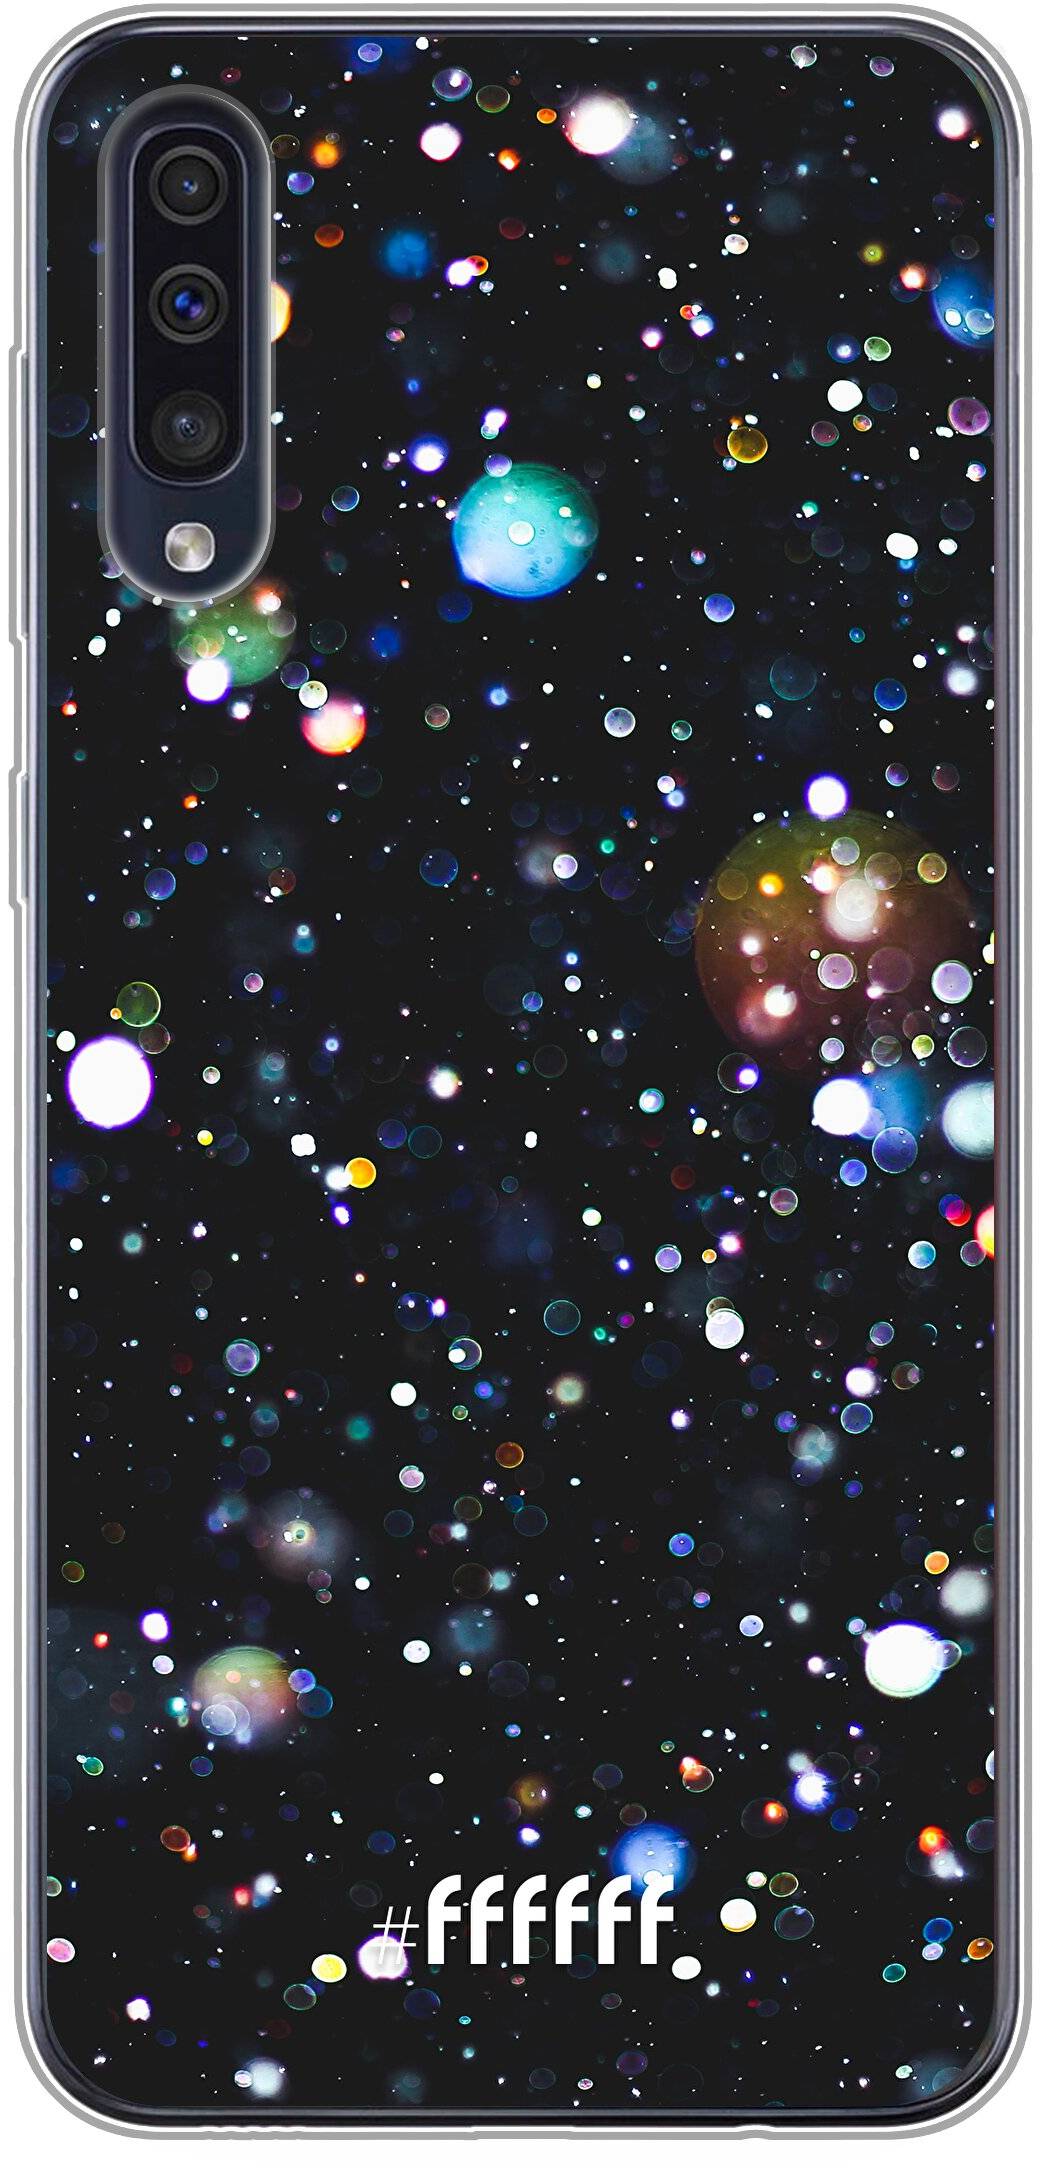 Galactic Bokeh Galaxy A50s